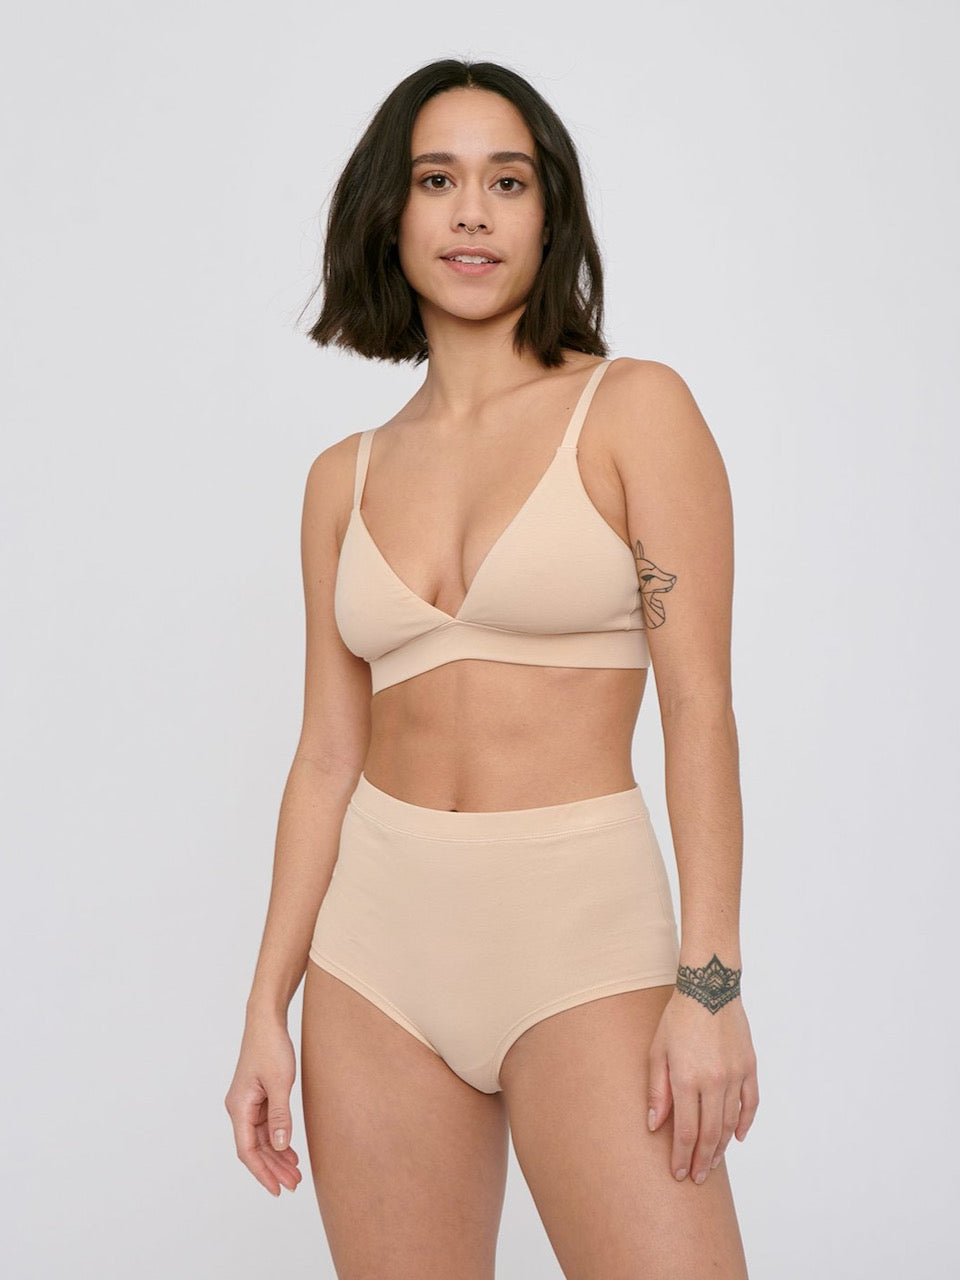 A woman in a Super High-Rise Briefs ⋅ organic cotton (2-pack) – Oak bikini top and panties by Organic Basics.